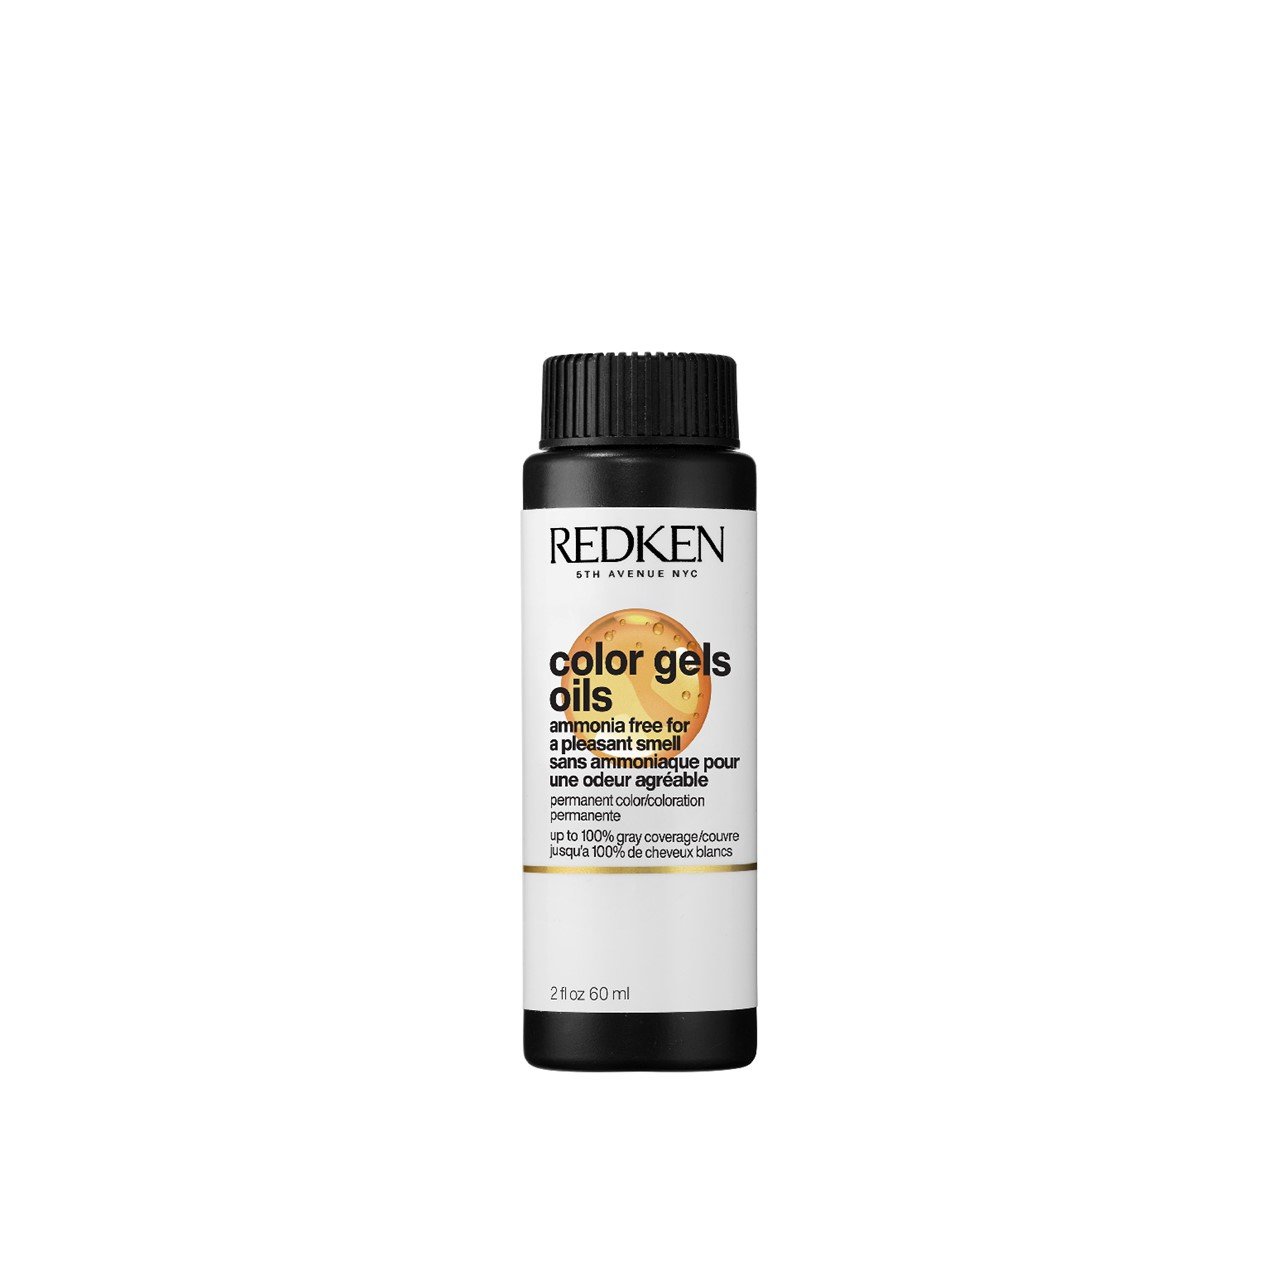 Redken Color Gels Oils 8NA Volcanic Permanent Hair Dye 60ml (2.03 fl oz)